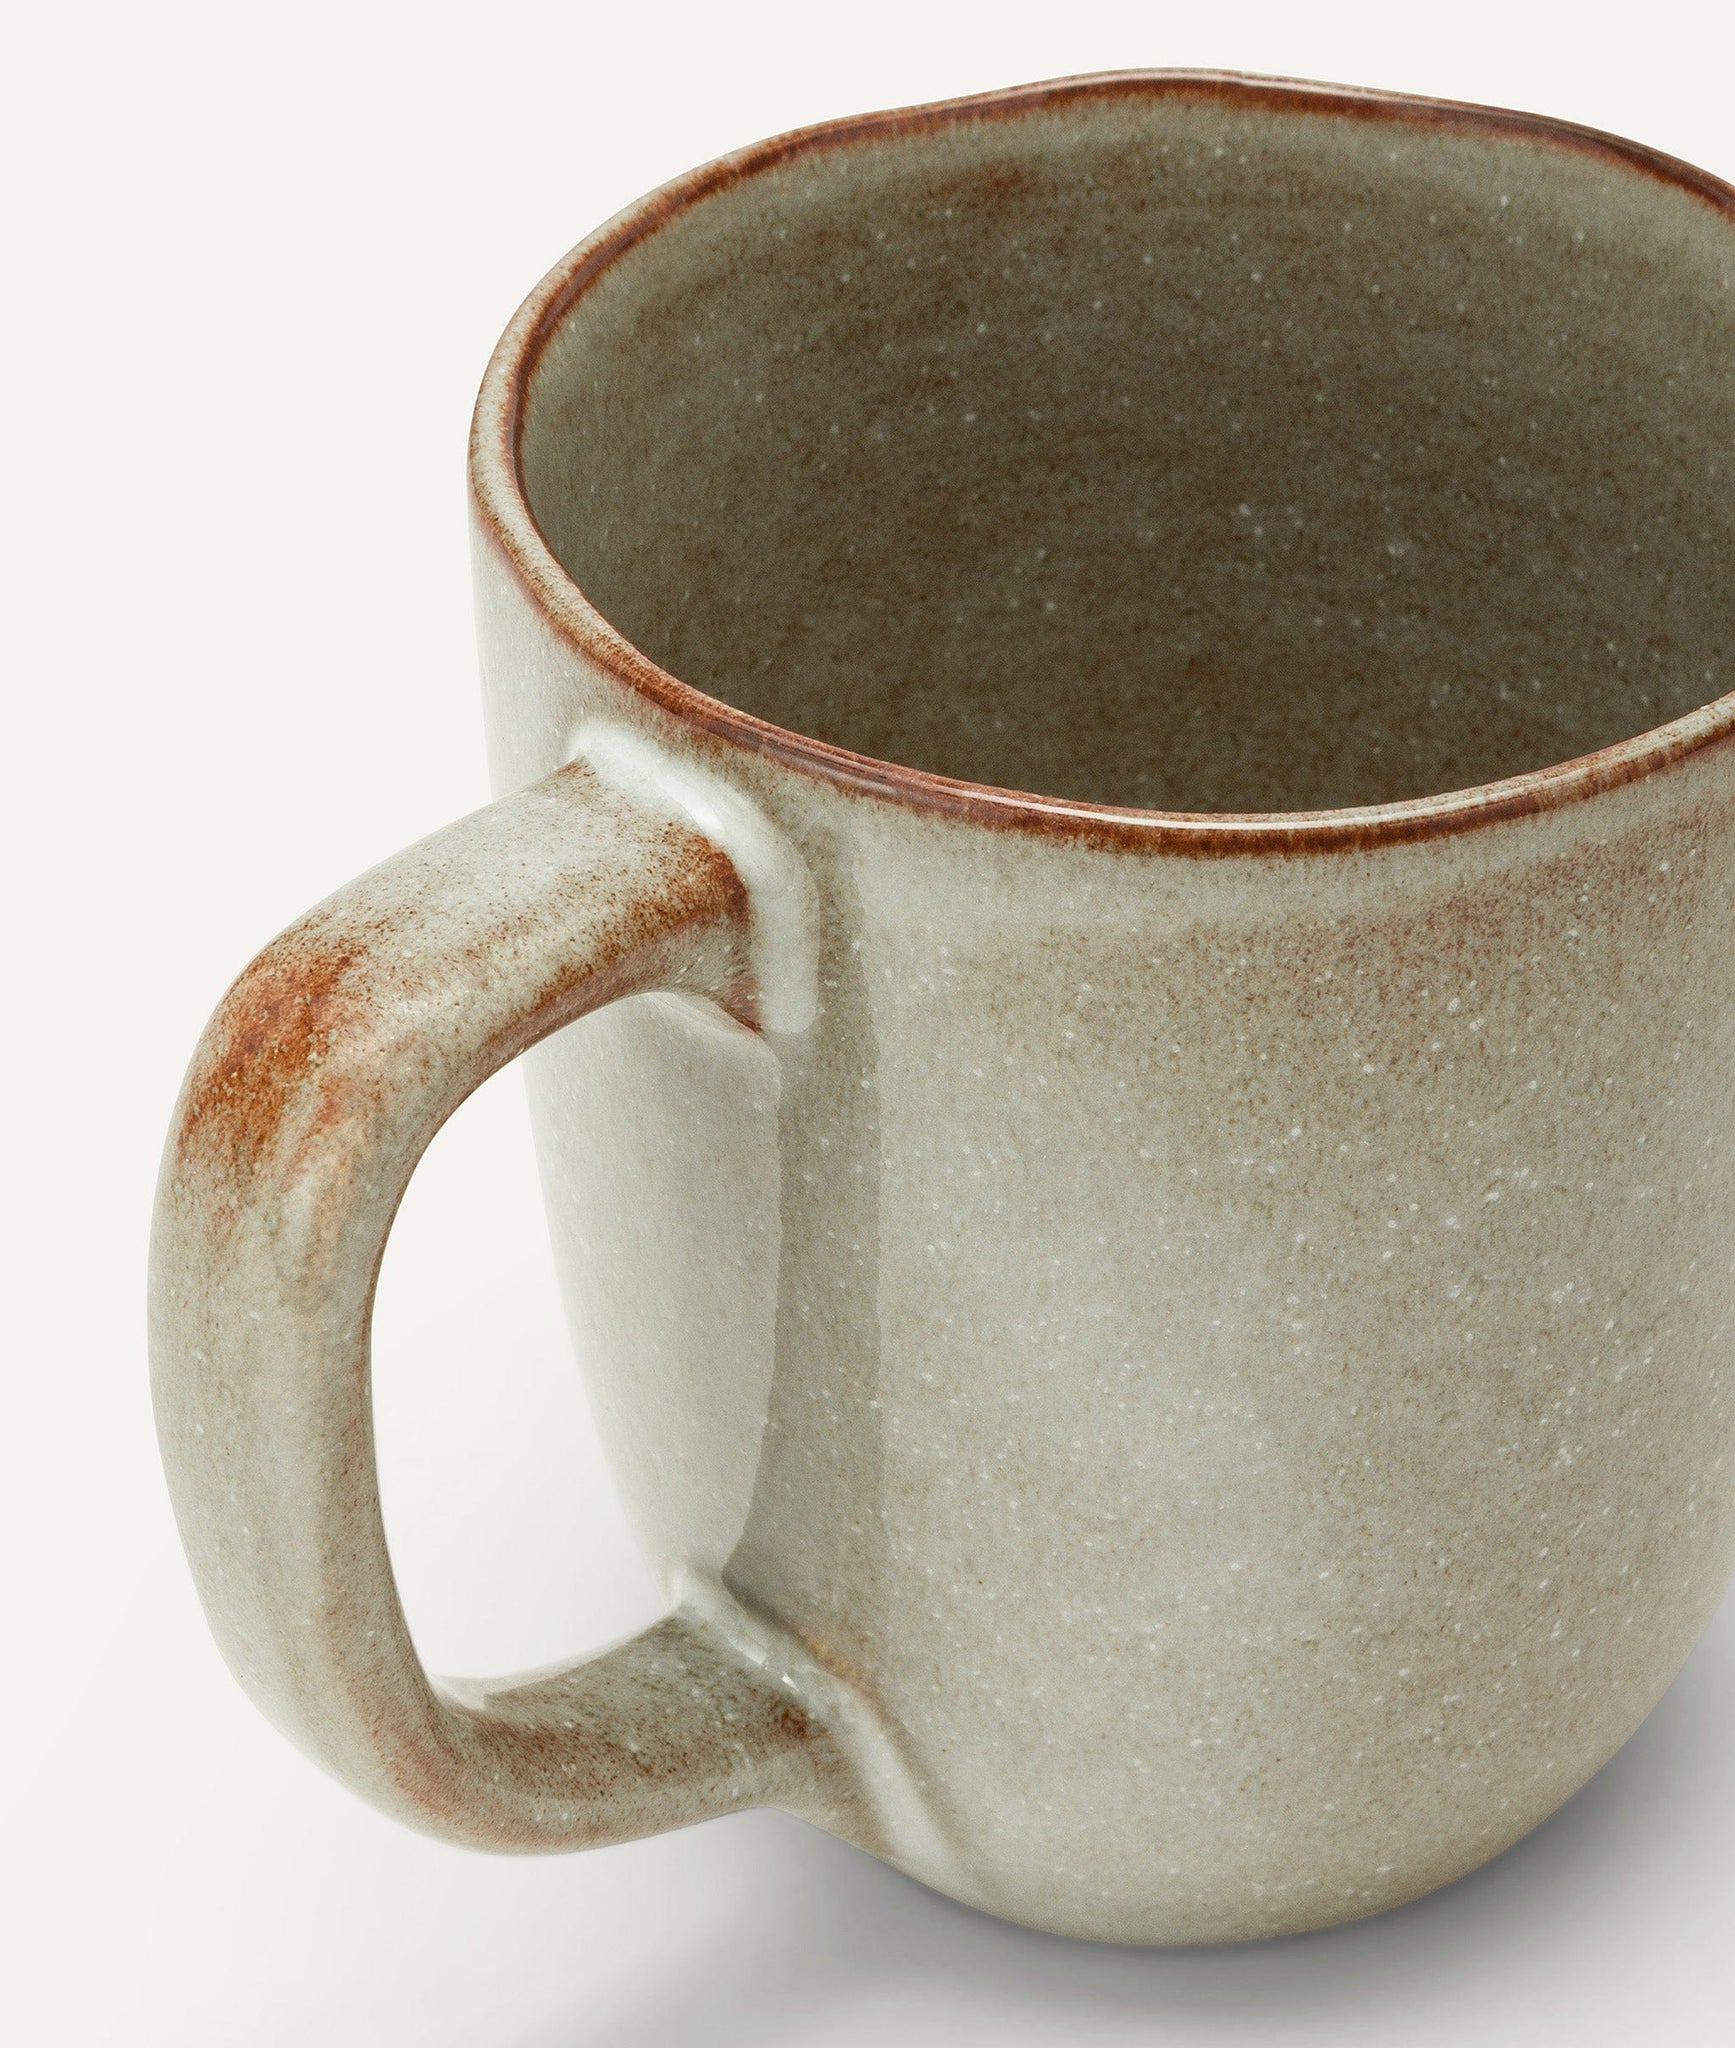 Coffee Mug in Ceramic